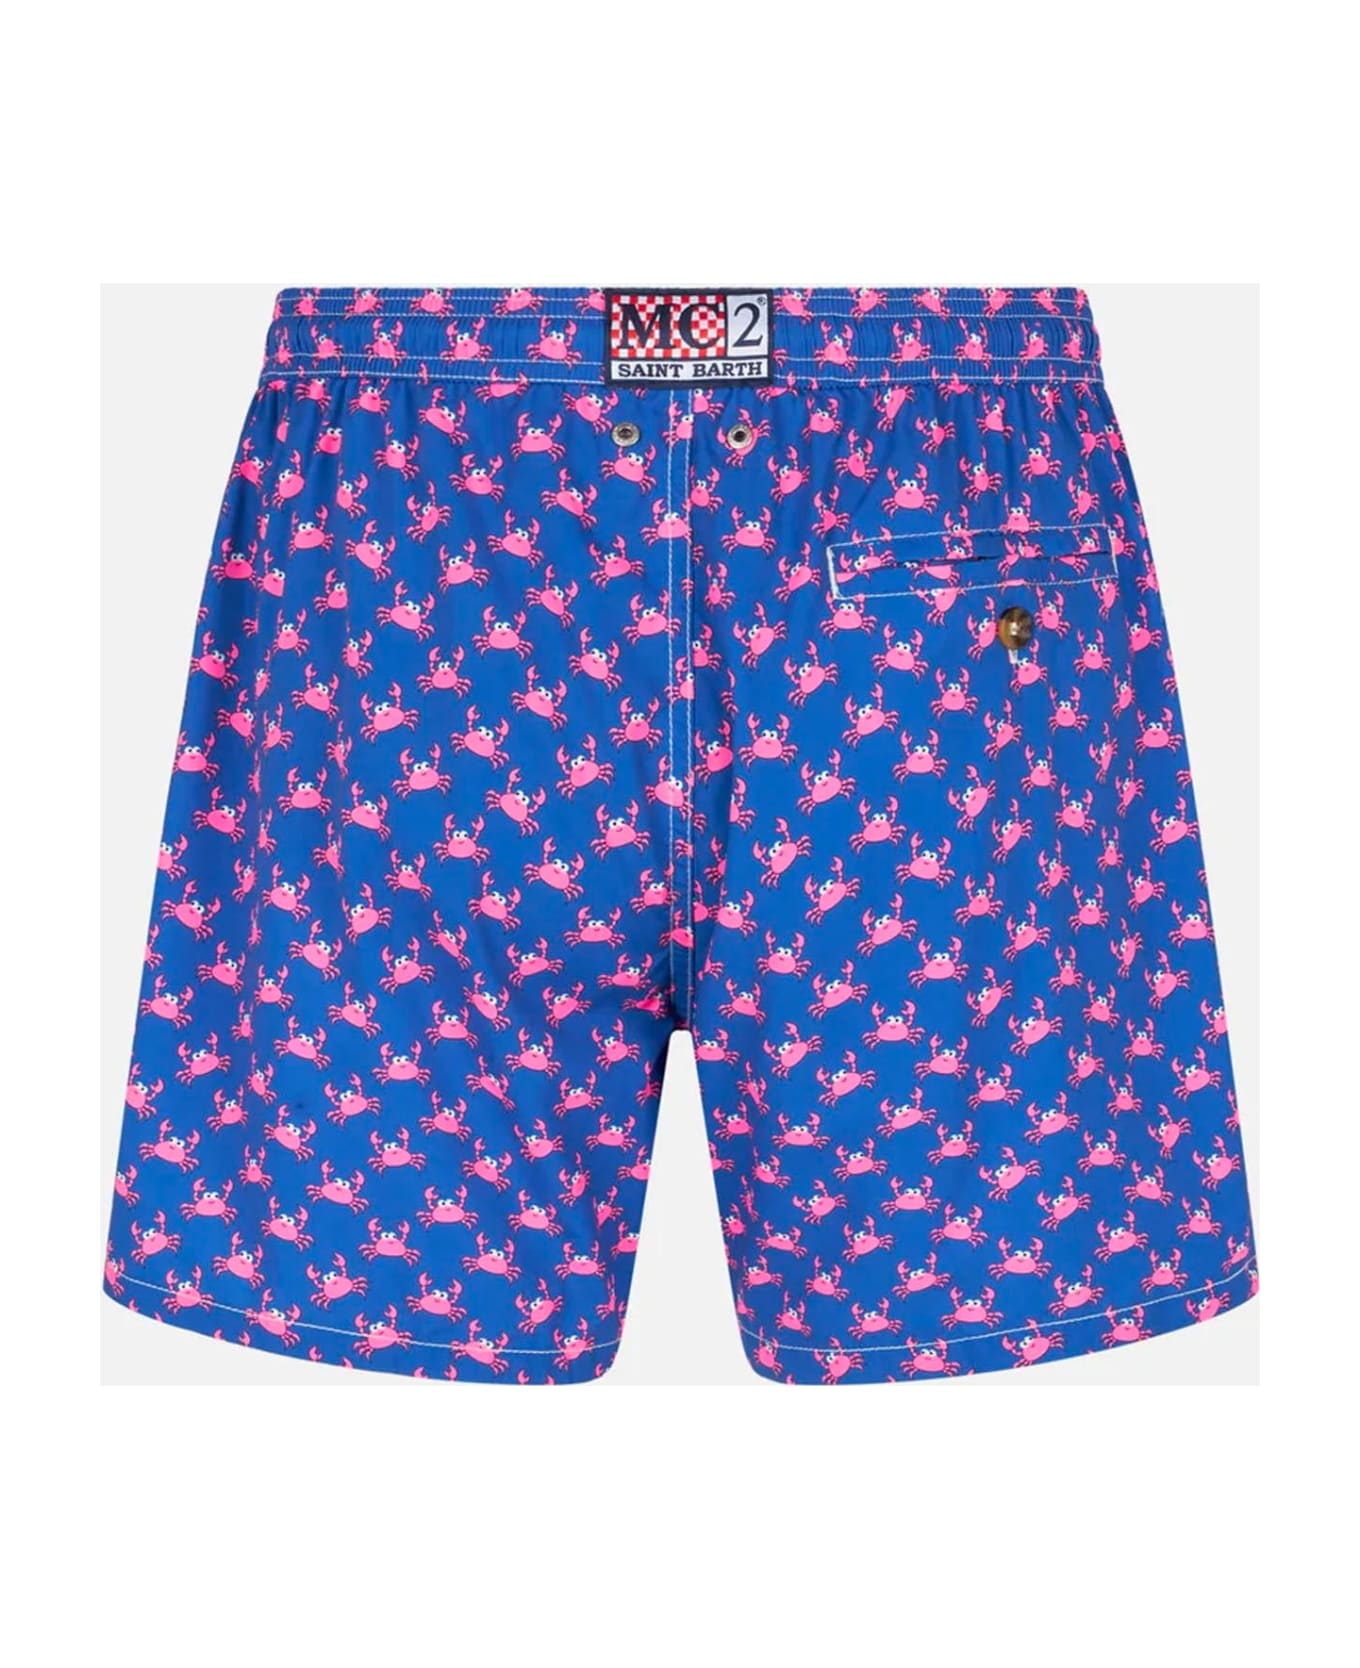 MC2 Saint Barth Man Light Fabric Comfort Swim Shorts With Crabs Print - BLUE